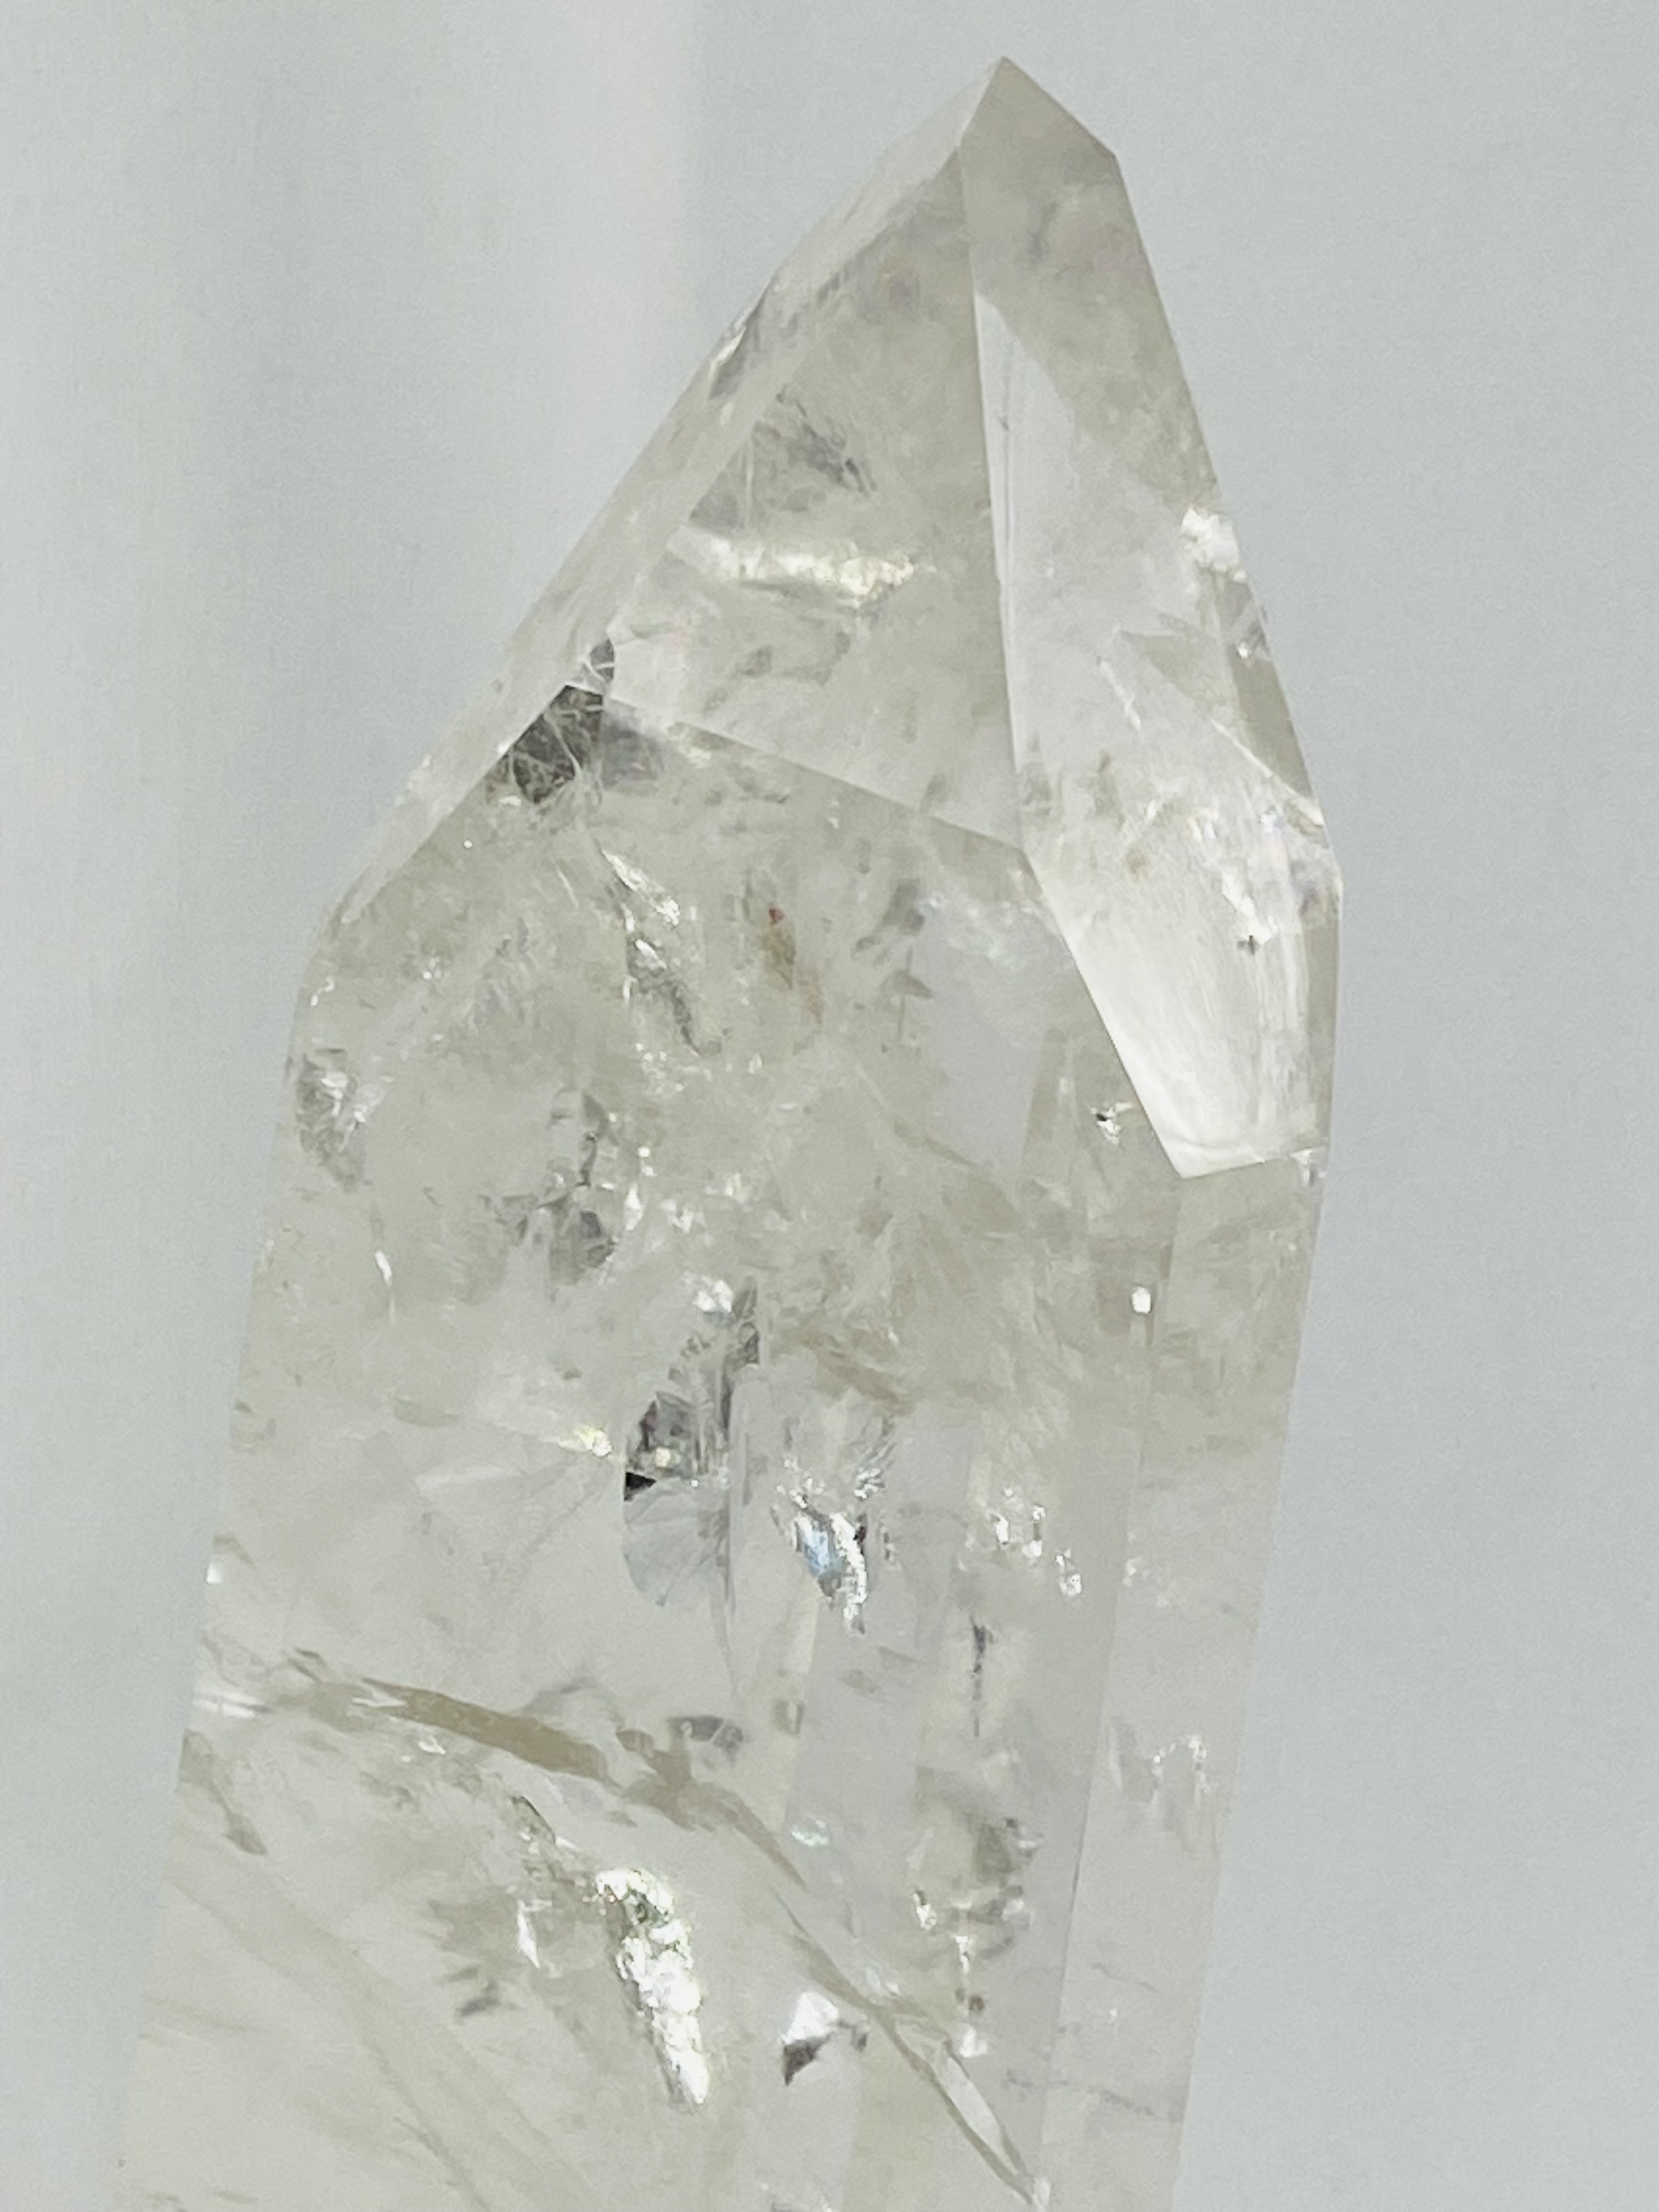 Polished rock crystal mounted in metal base - Image 6 of 6